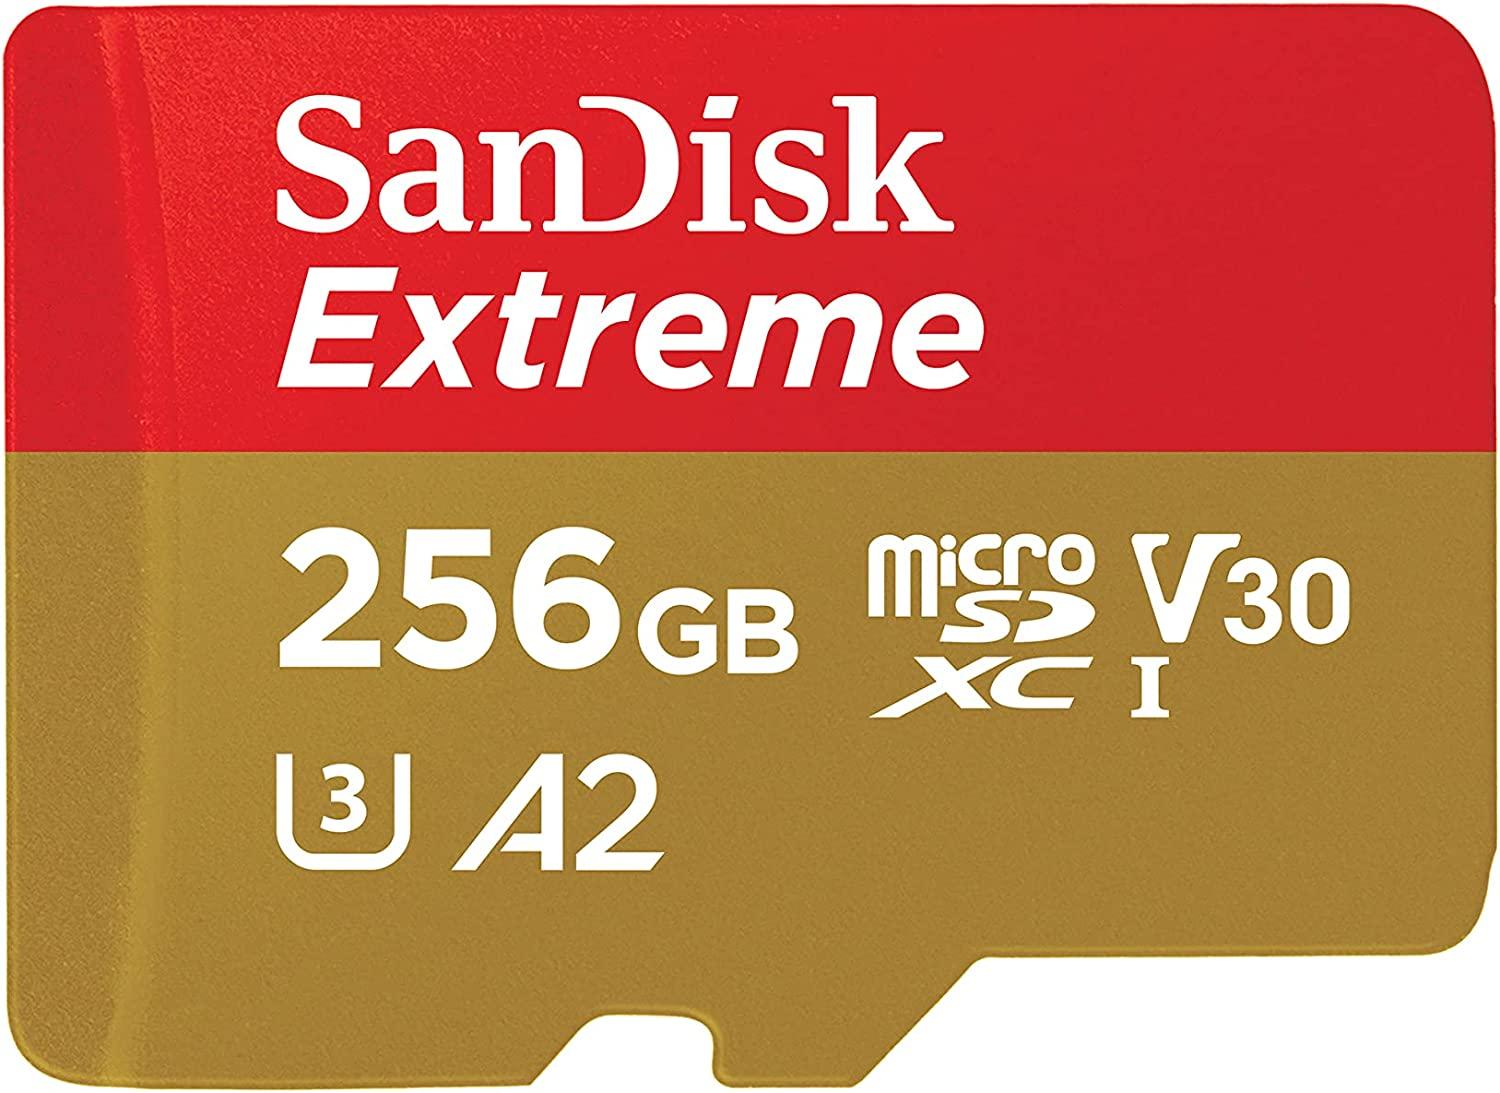 256GB SanDisk Extreme microSDXC Memory Card for $24.99